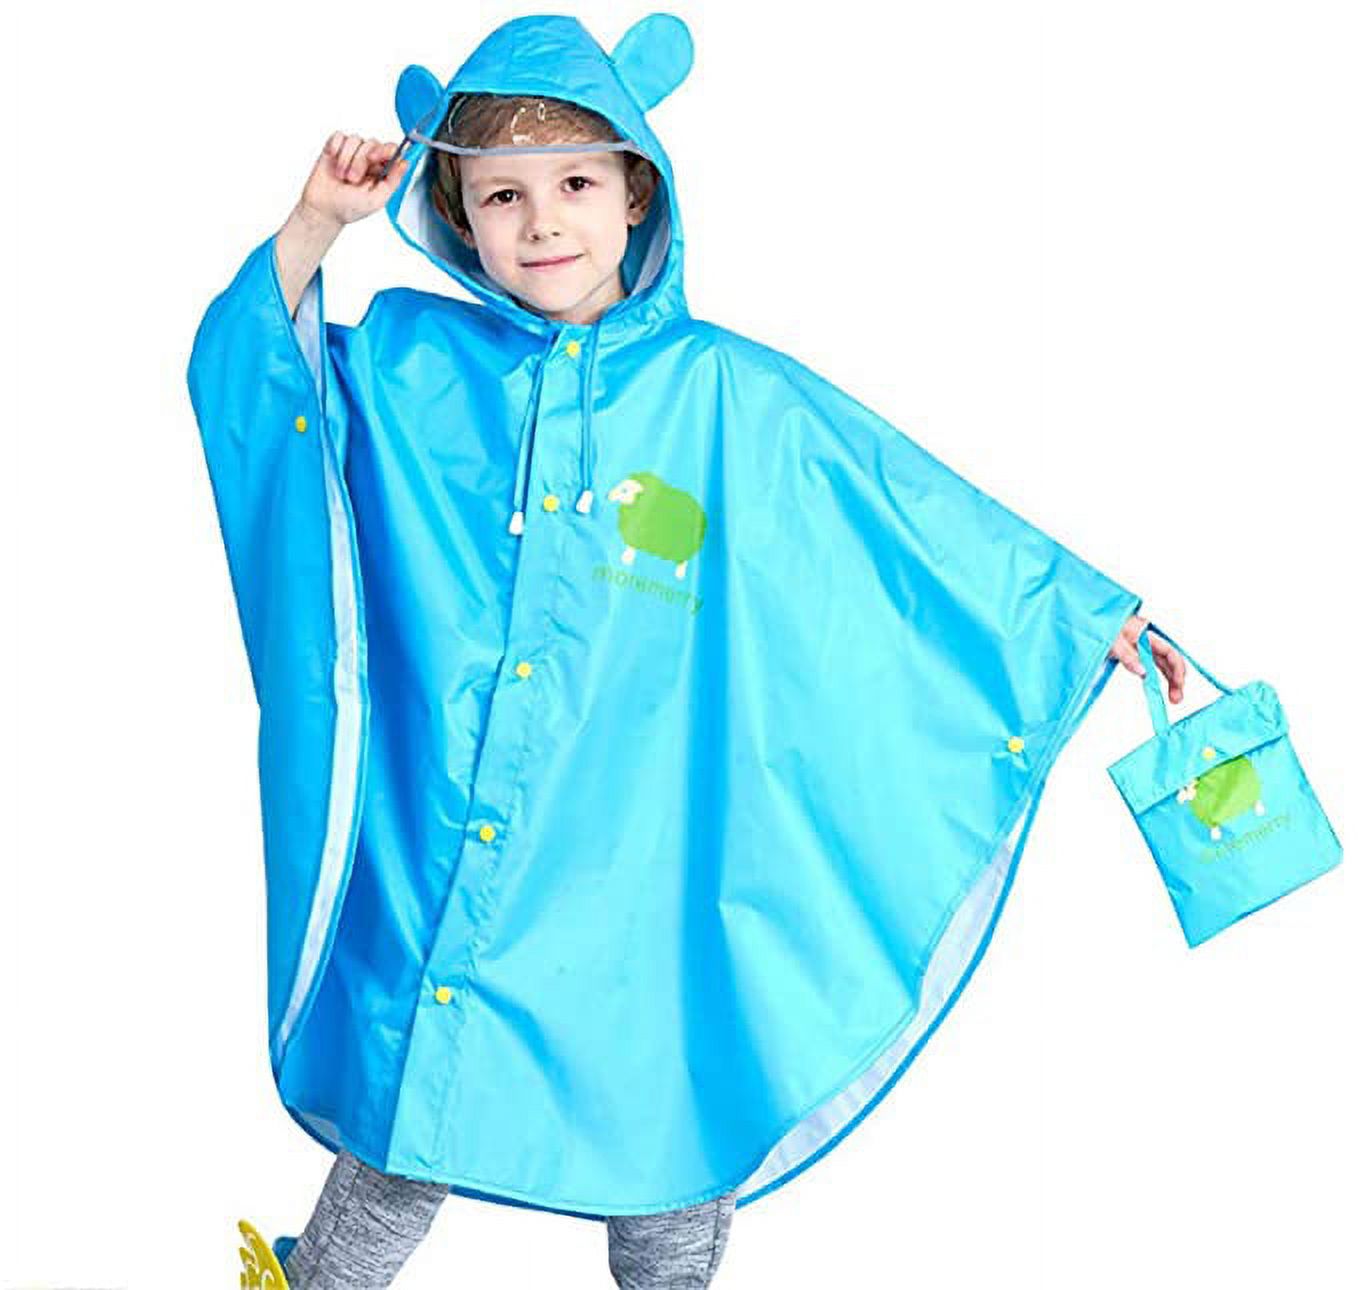 Kids Poncho Hooded Raincoat Durable Waterproof Portable Rain Cape for Boys Girls Blue XL - image 1 of 3